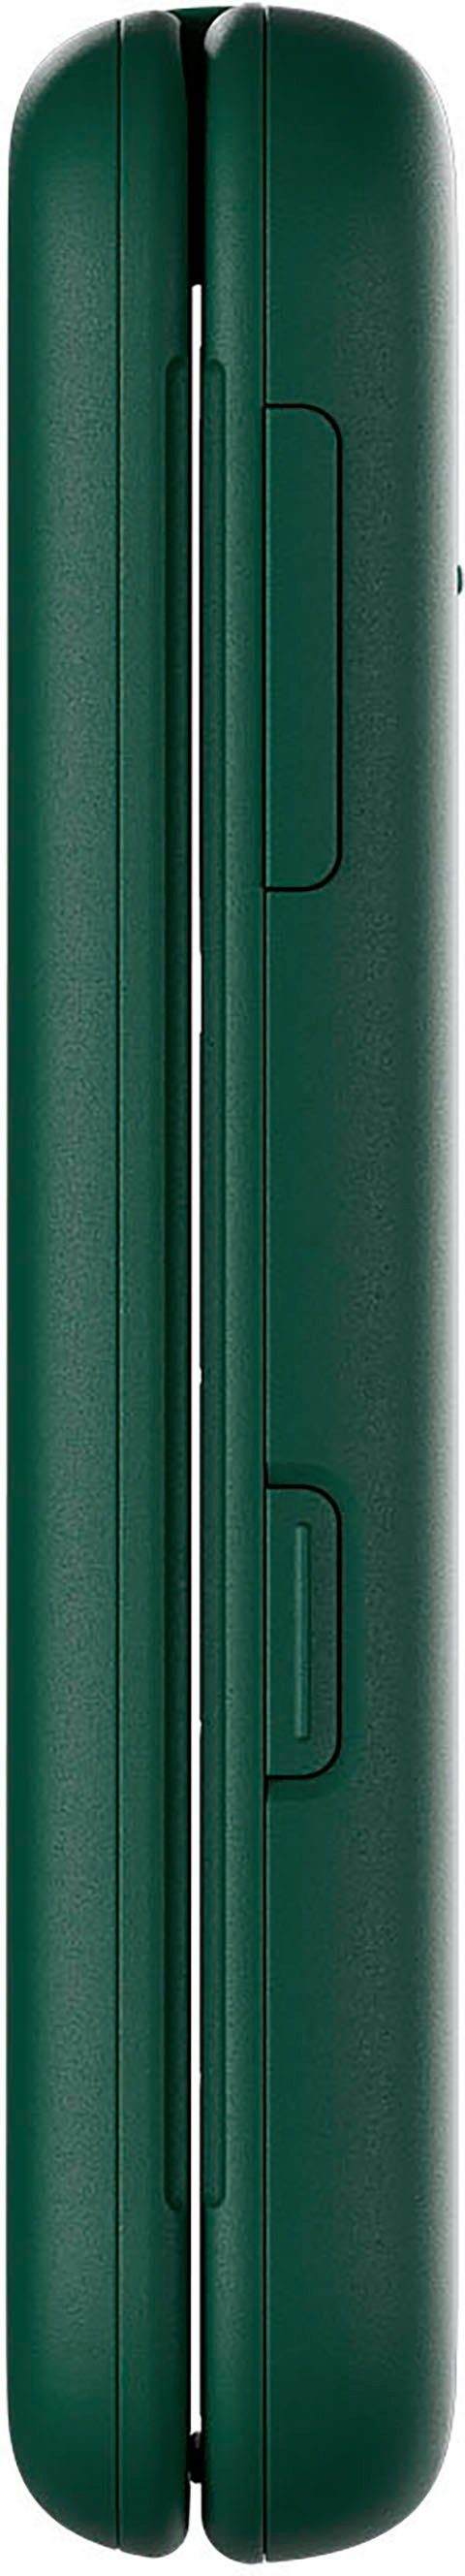 Nokia 2660 MP grün GB Flip 0,3 (7,11 Zoll, 0,13 Klapphandy cm/2,8 Speicherplatz, Kamera)